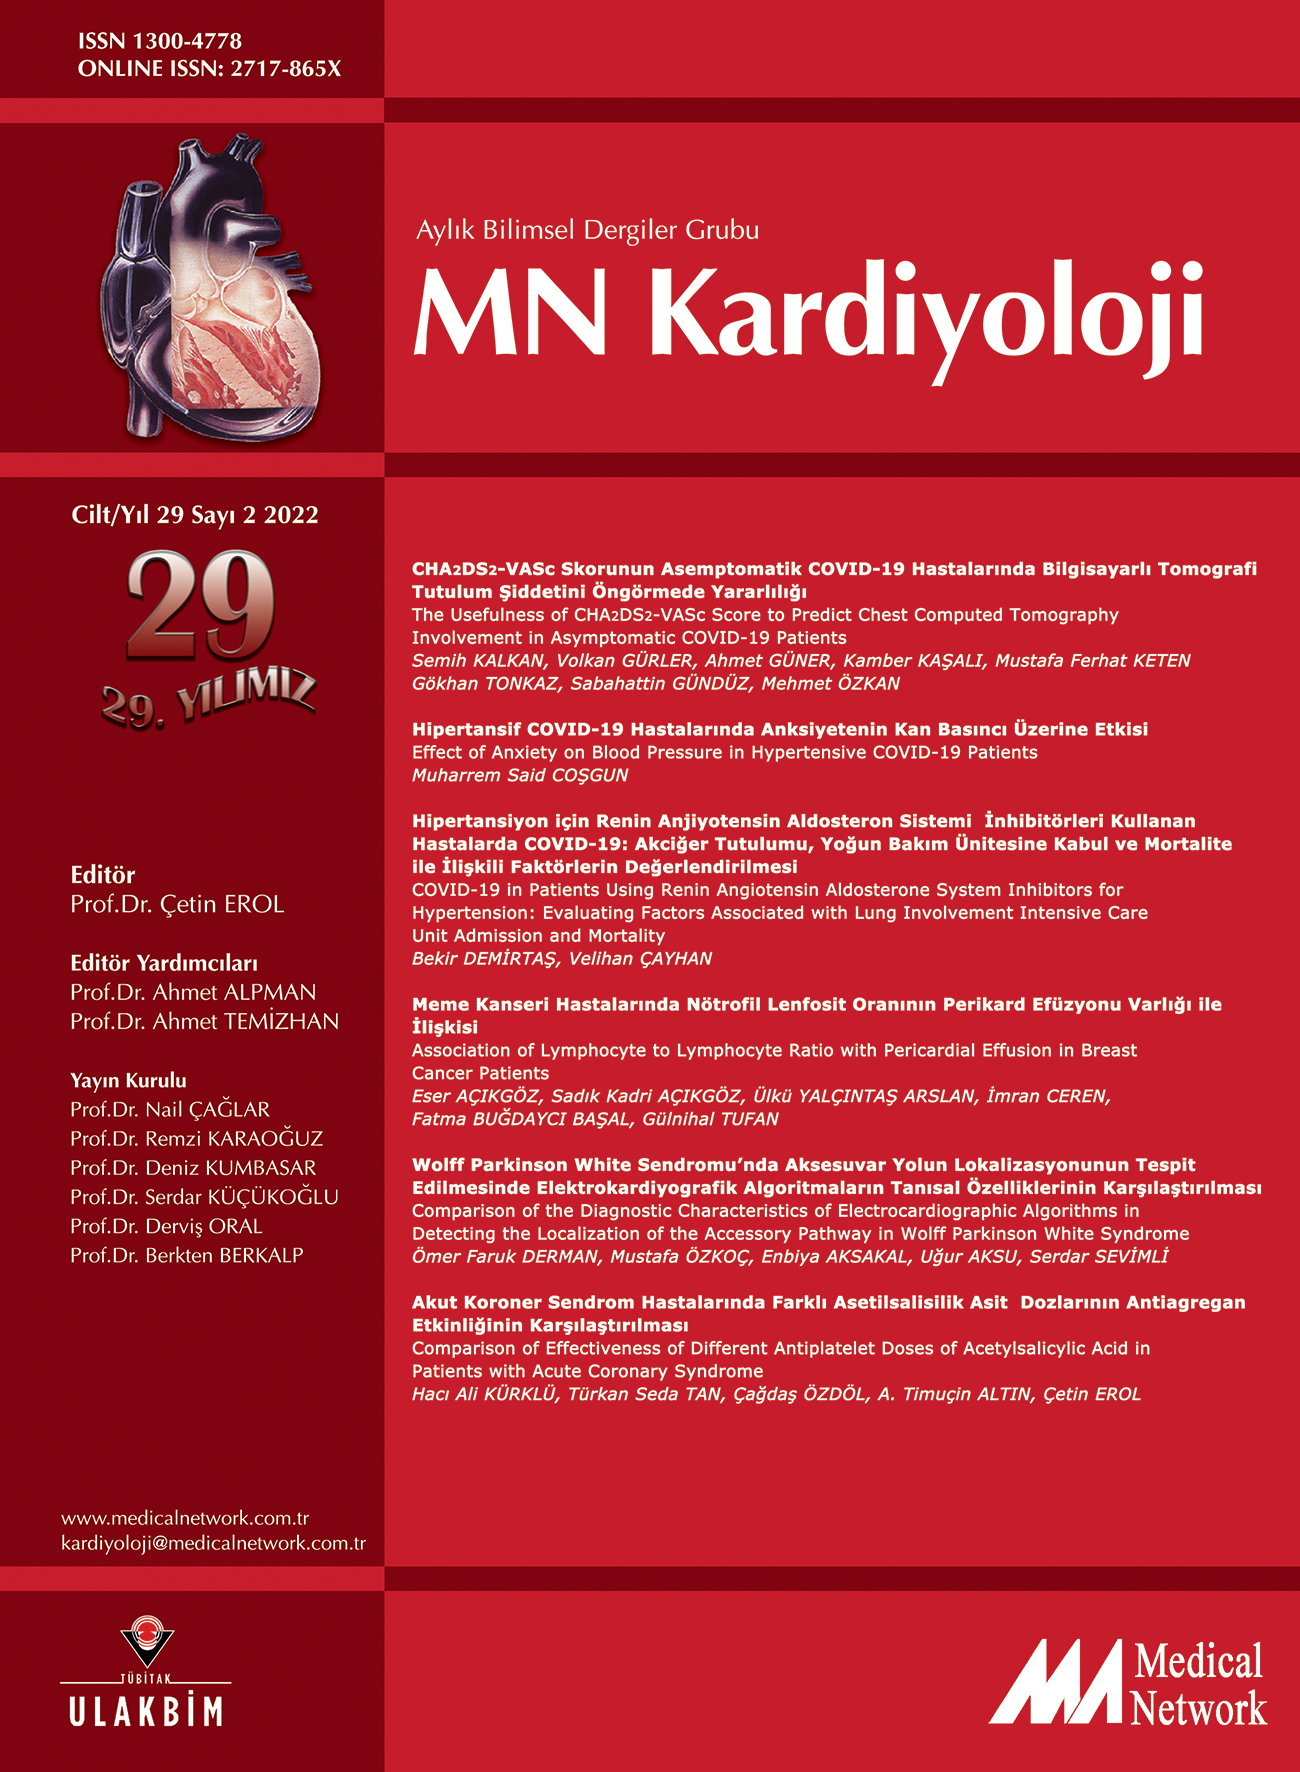 <p>MN Kardiyoloji Cilt: 29 Sayı: 2 2022 MN Cardiology Volume: 29 No: 2 2022</p>